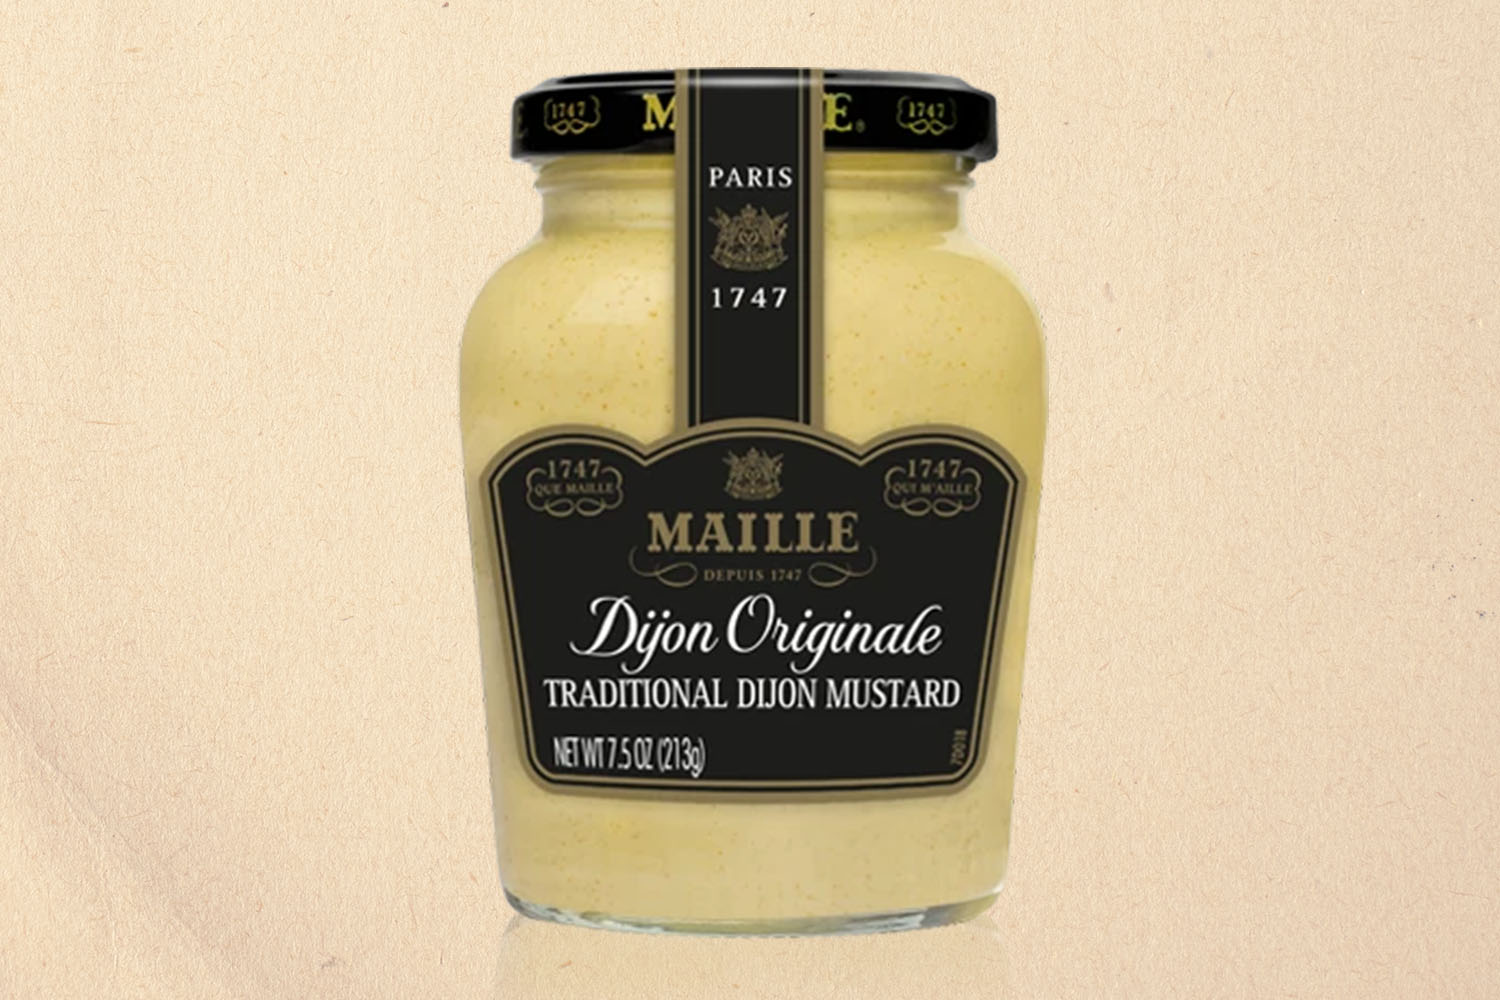 Maille traditional dijon mustard